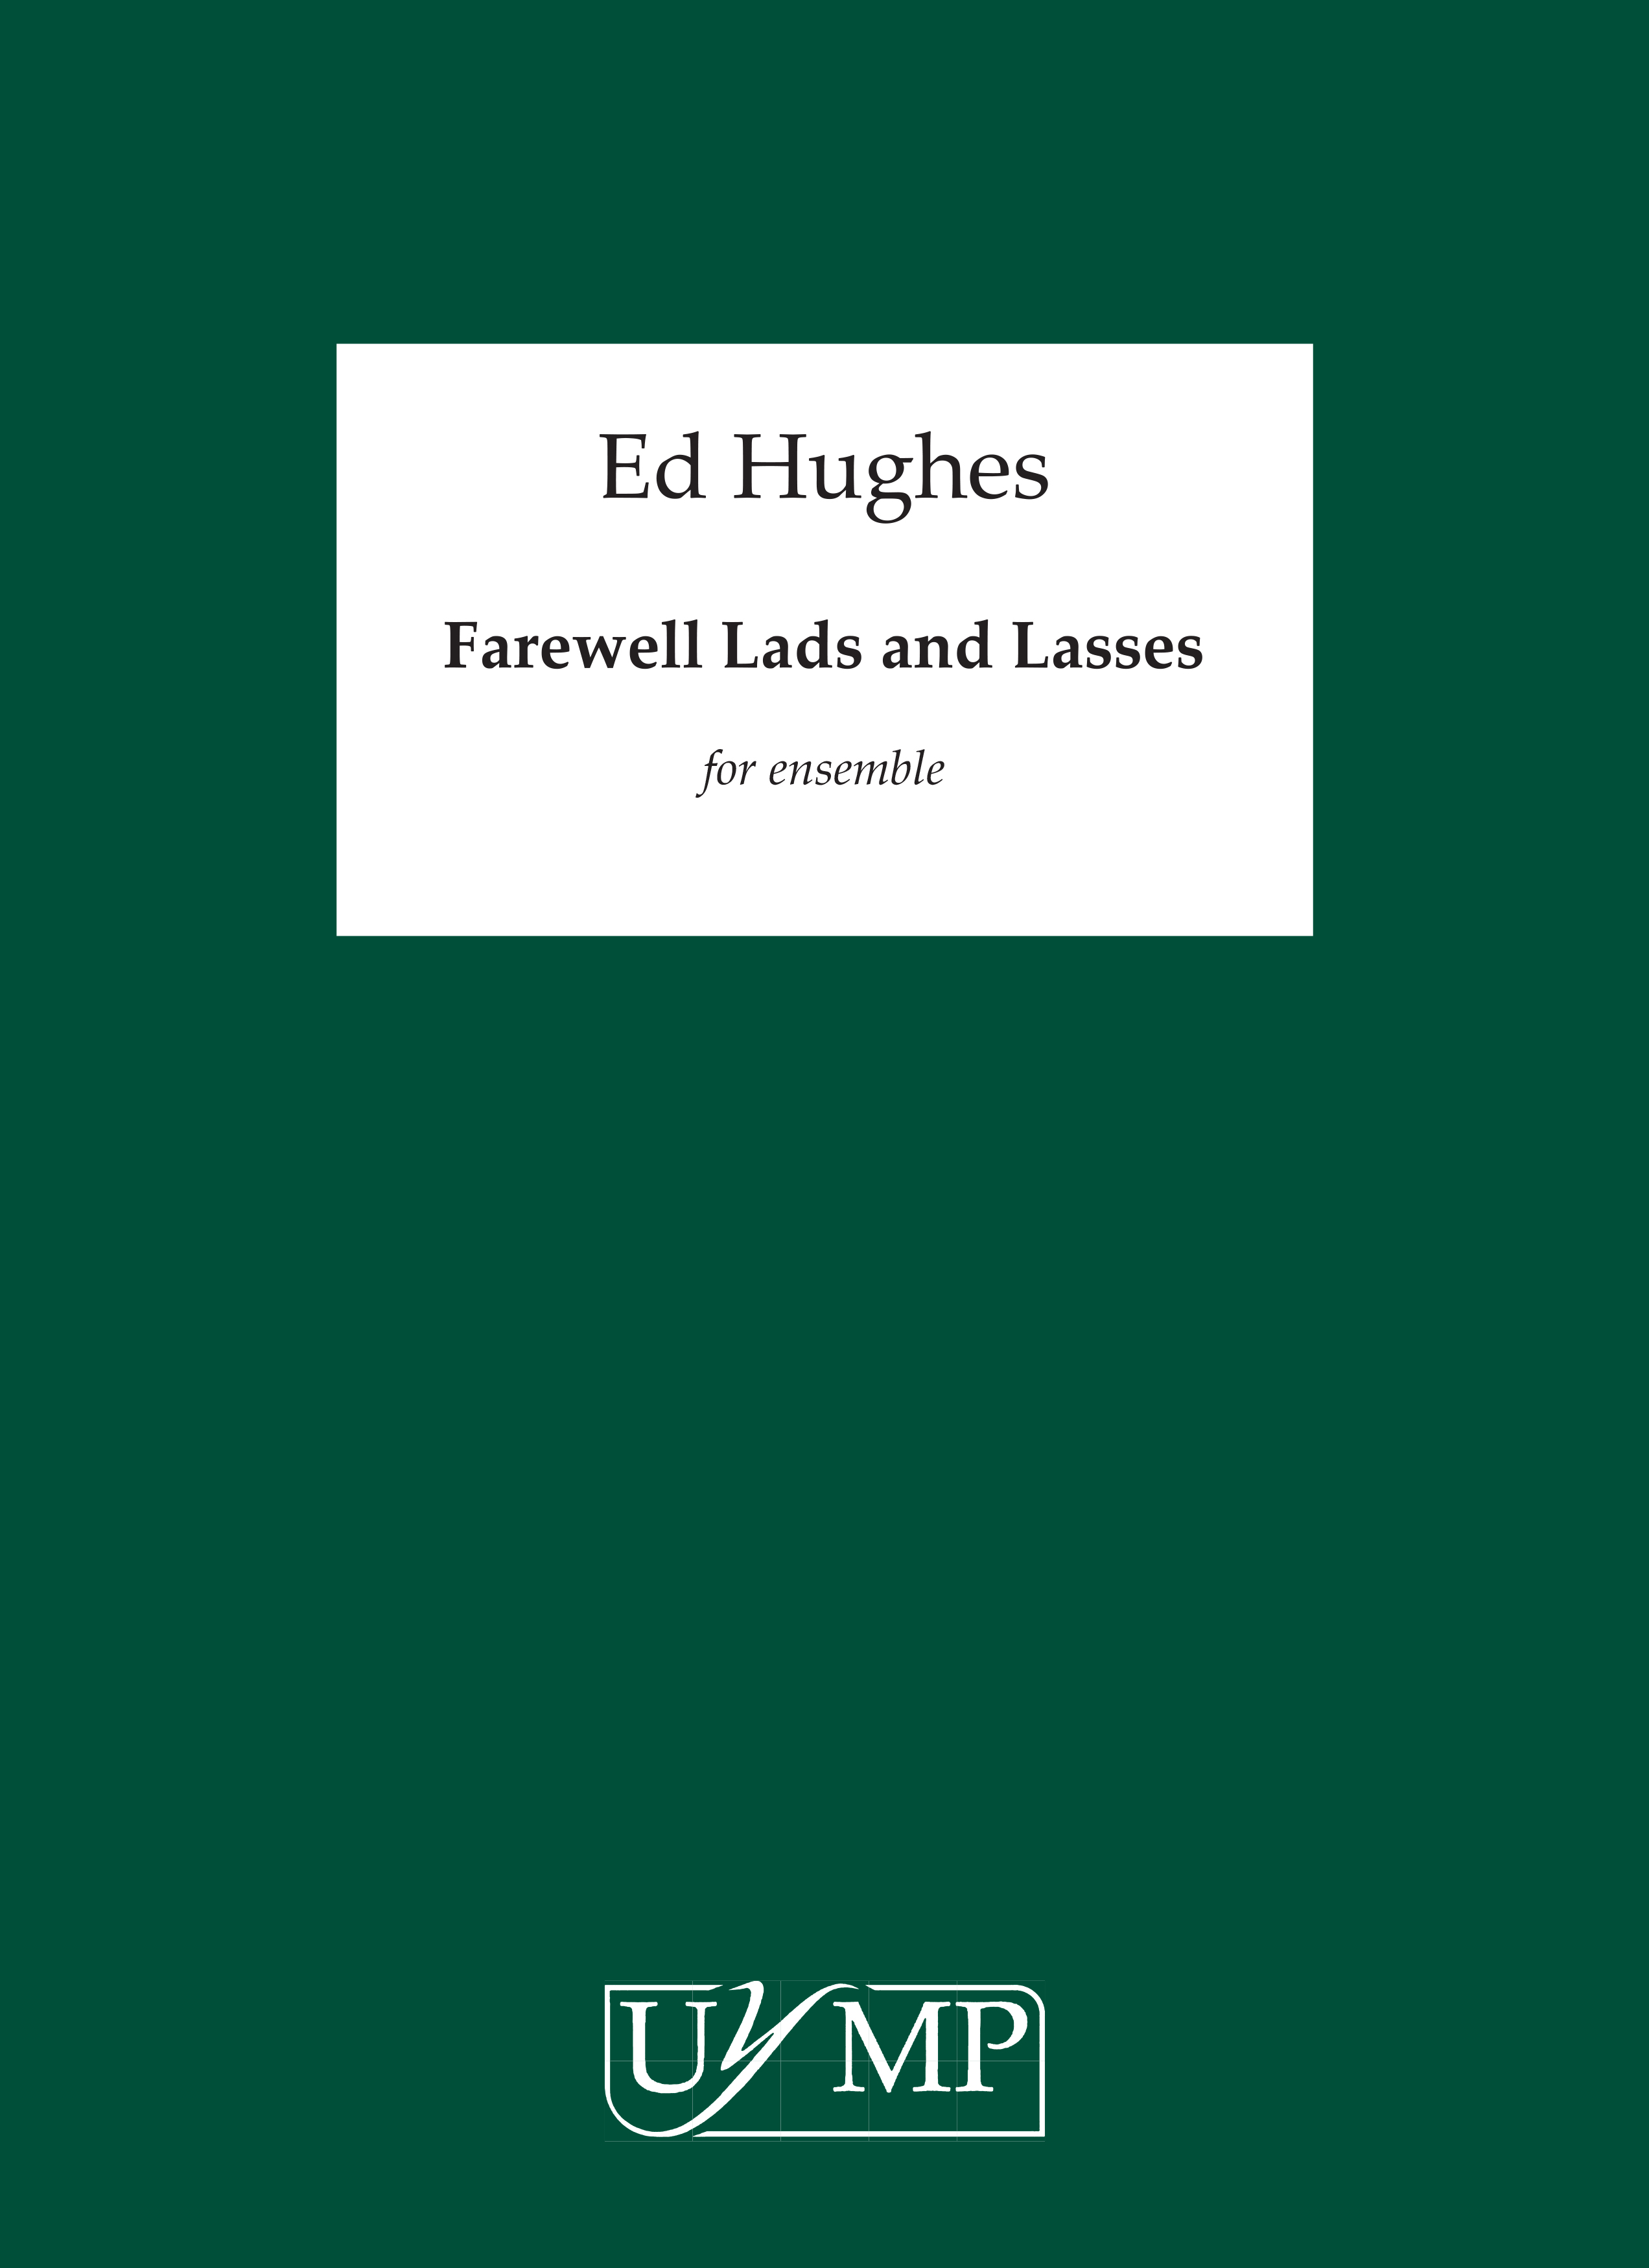 Ed Hughes: Farewell Lads and Lasses